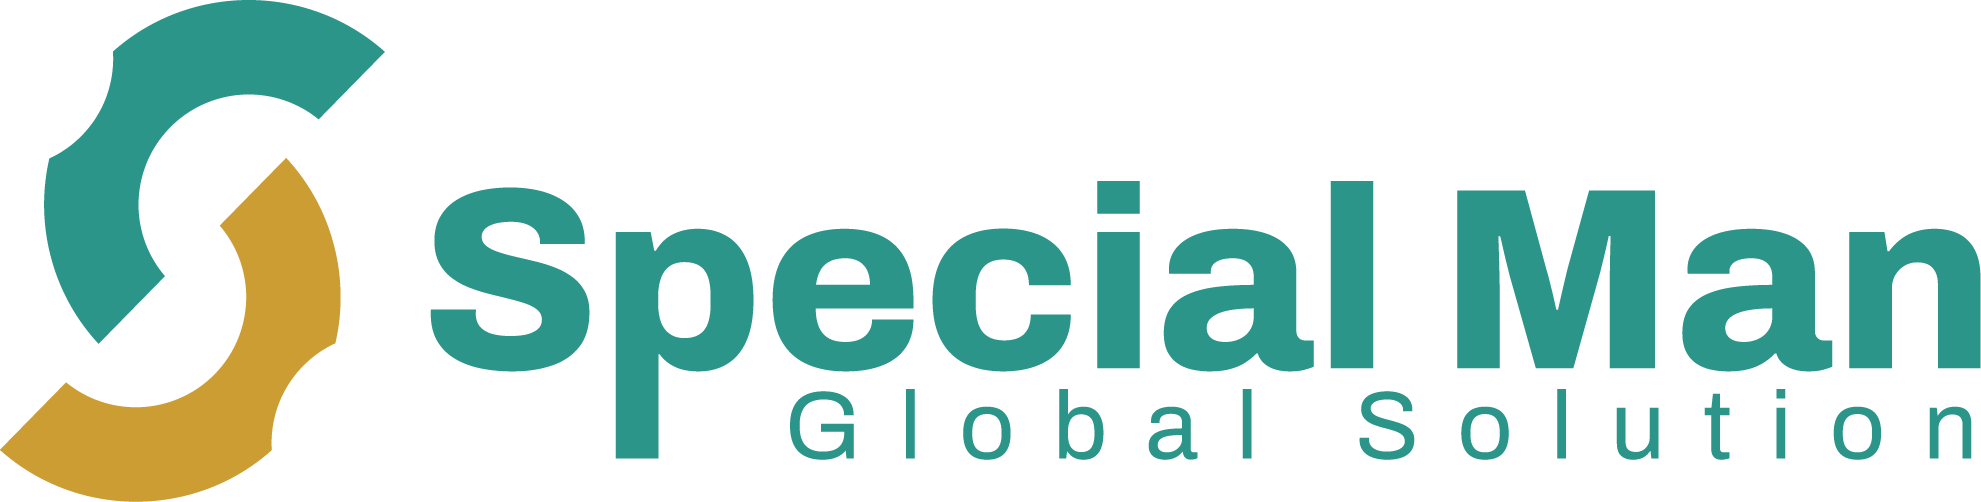 Special Man global solution ltd logo